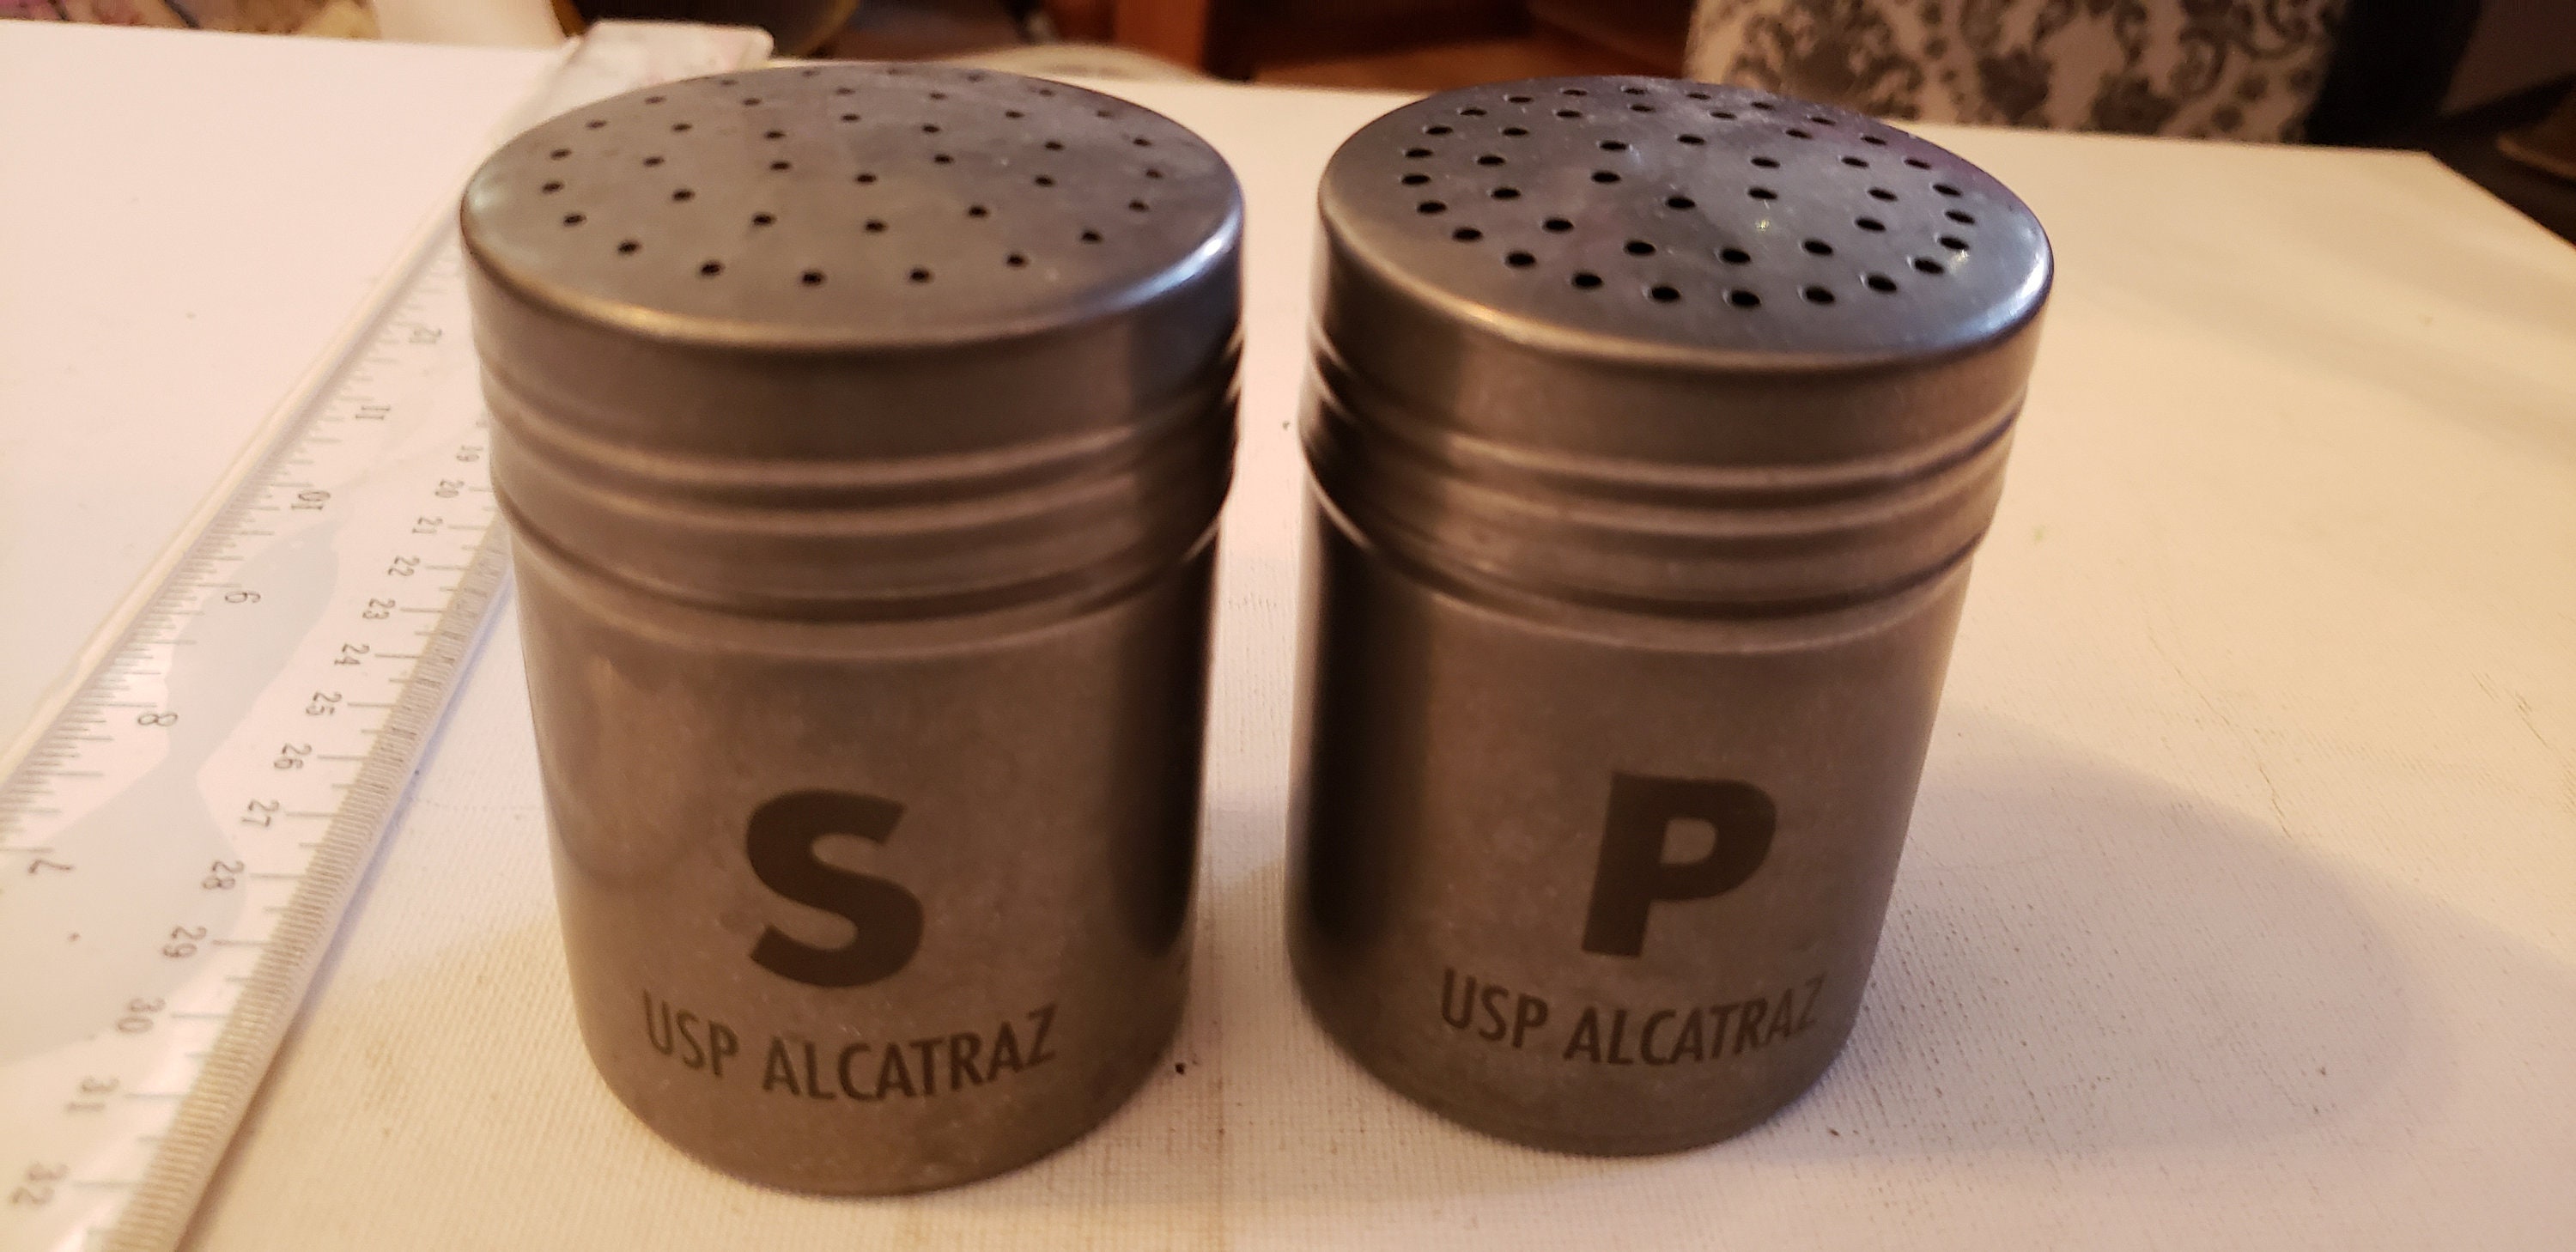 Salt and Pepper Shaker Set - USP Alcatraz